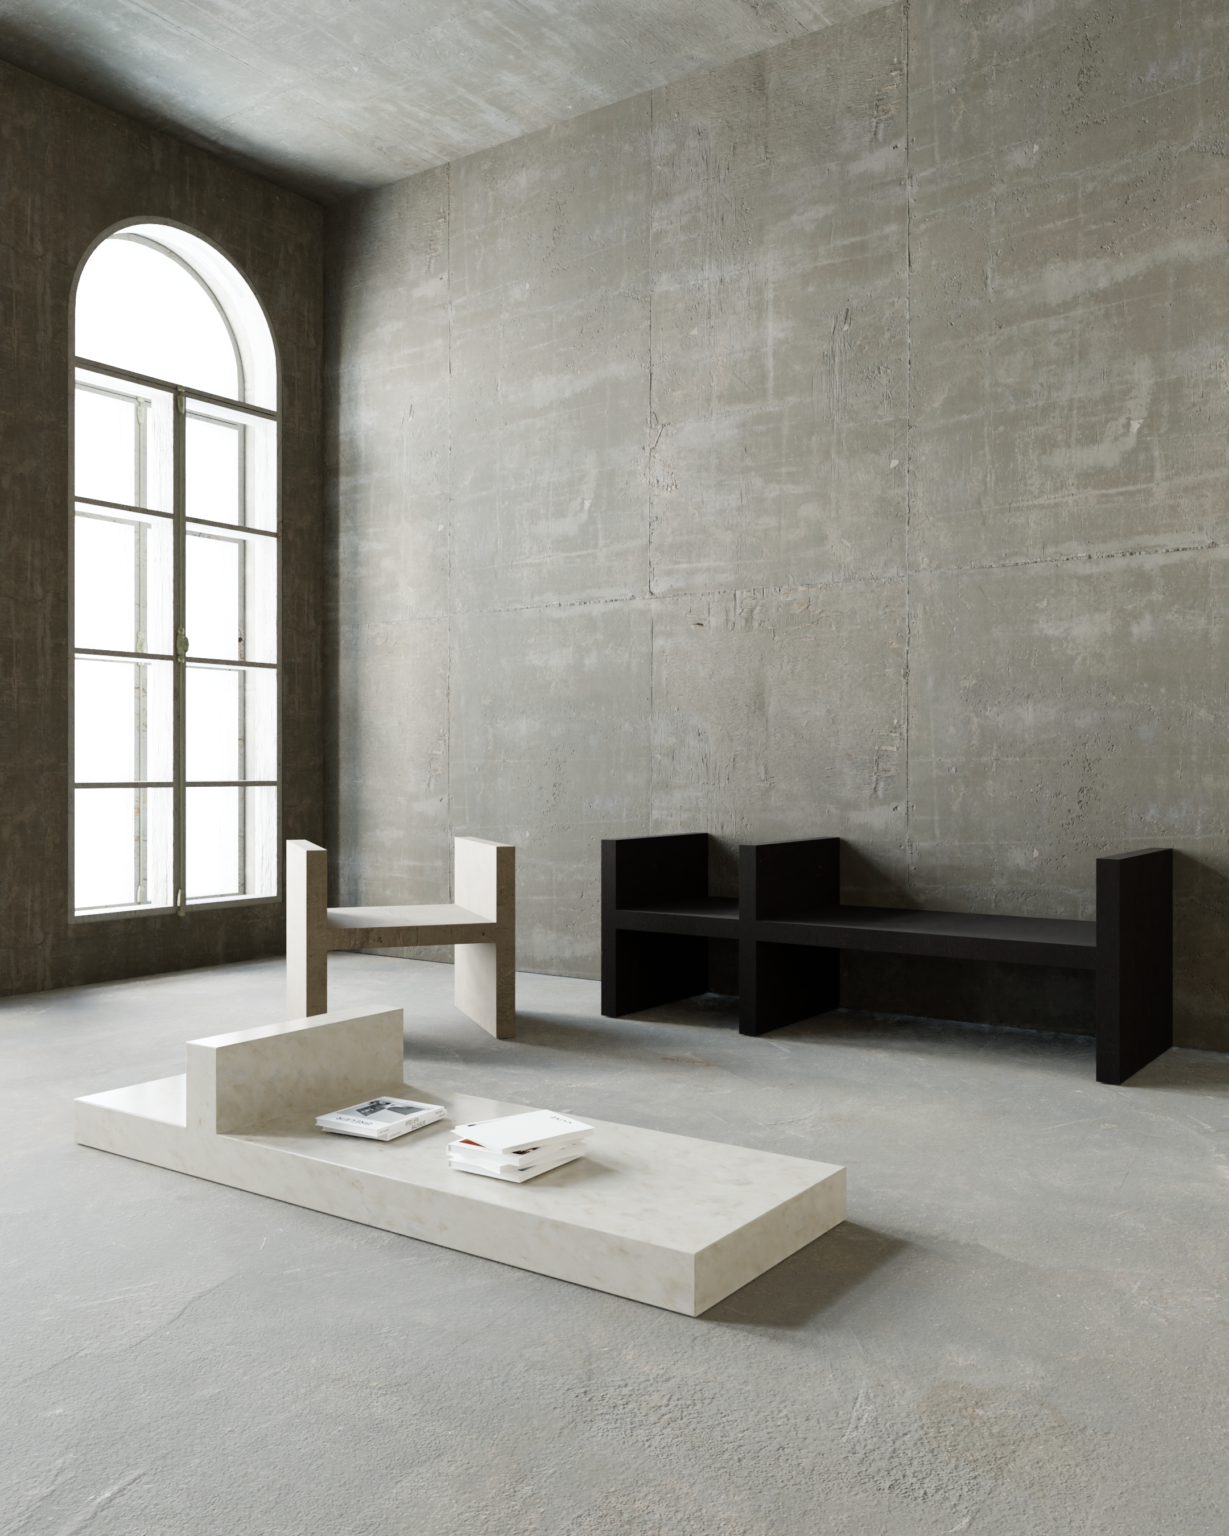 Casa moderna y minimalista de la arquitecta Maria Osminina salon con sofa negro